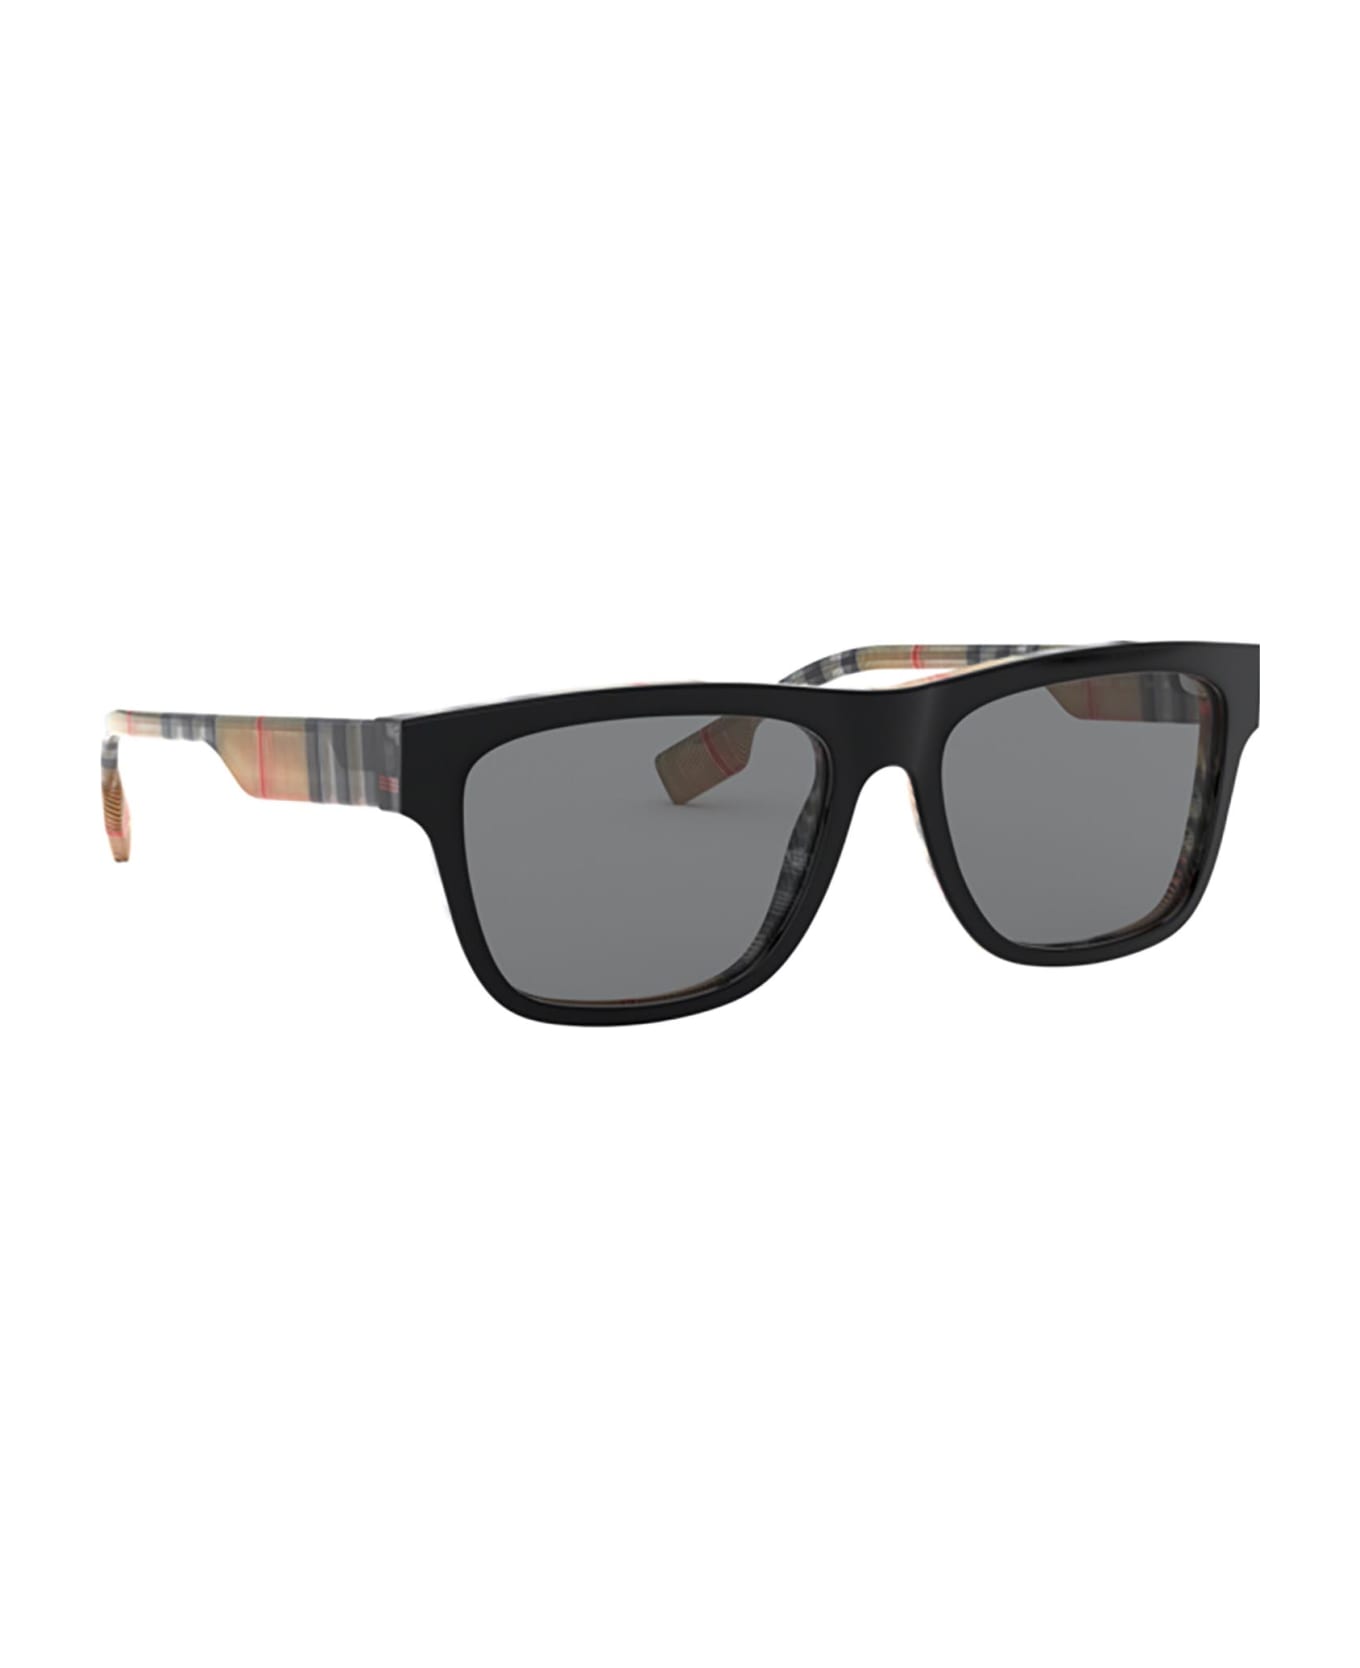 Burberry Eyewear Be4293 Top Black On Vintage Check Sunglasses - Top Black on Vintage Check